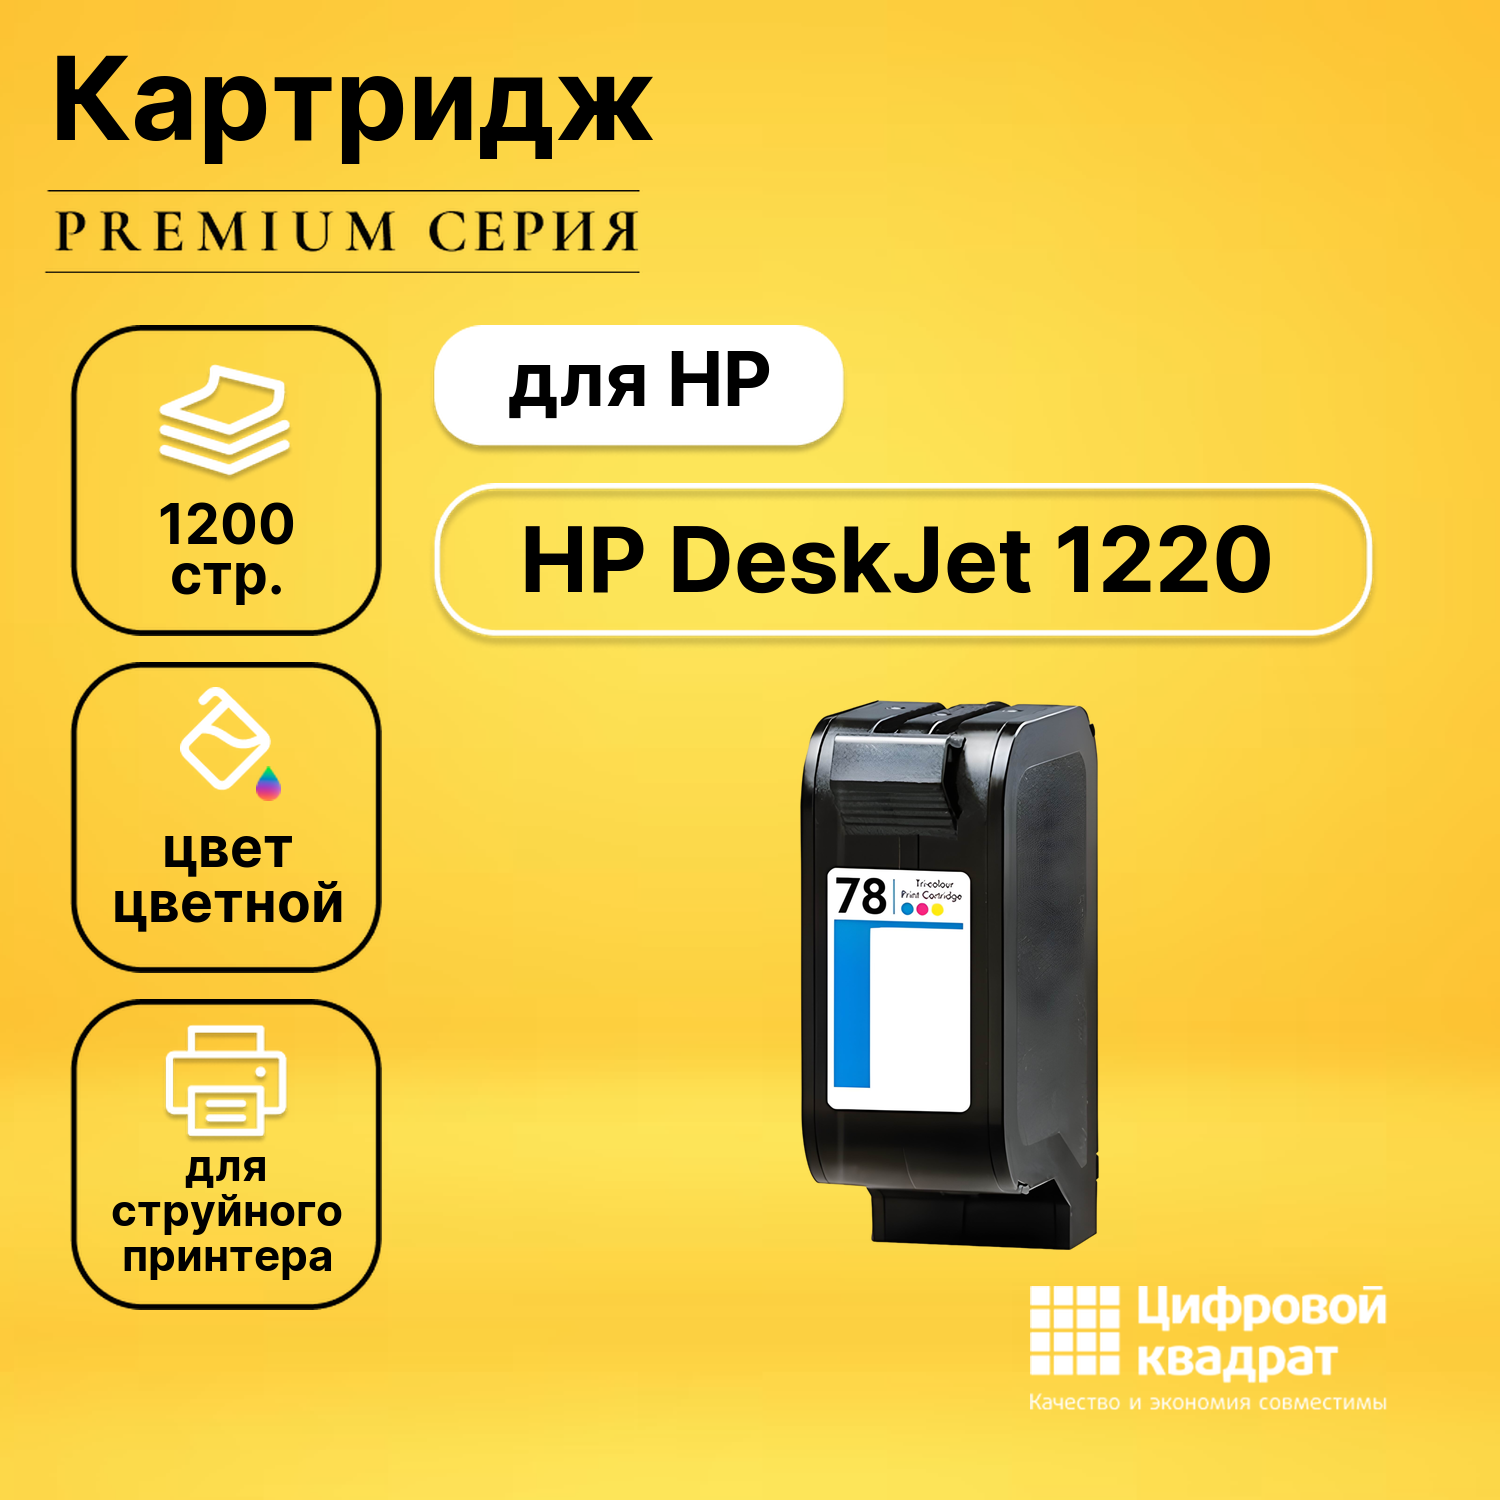 Картридж DS для HP DeskJet 1220 совместимый